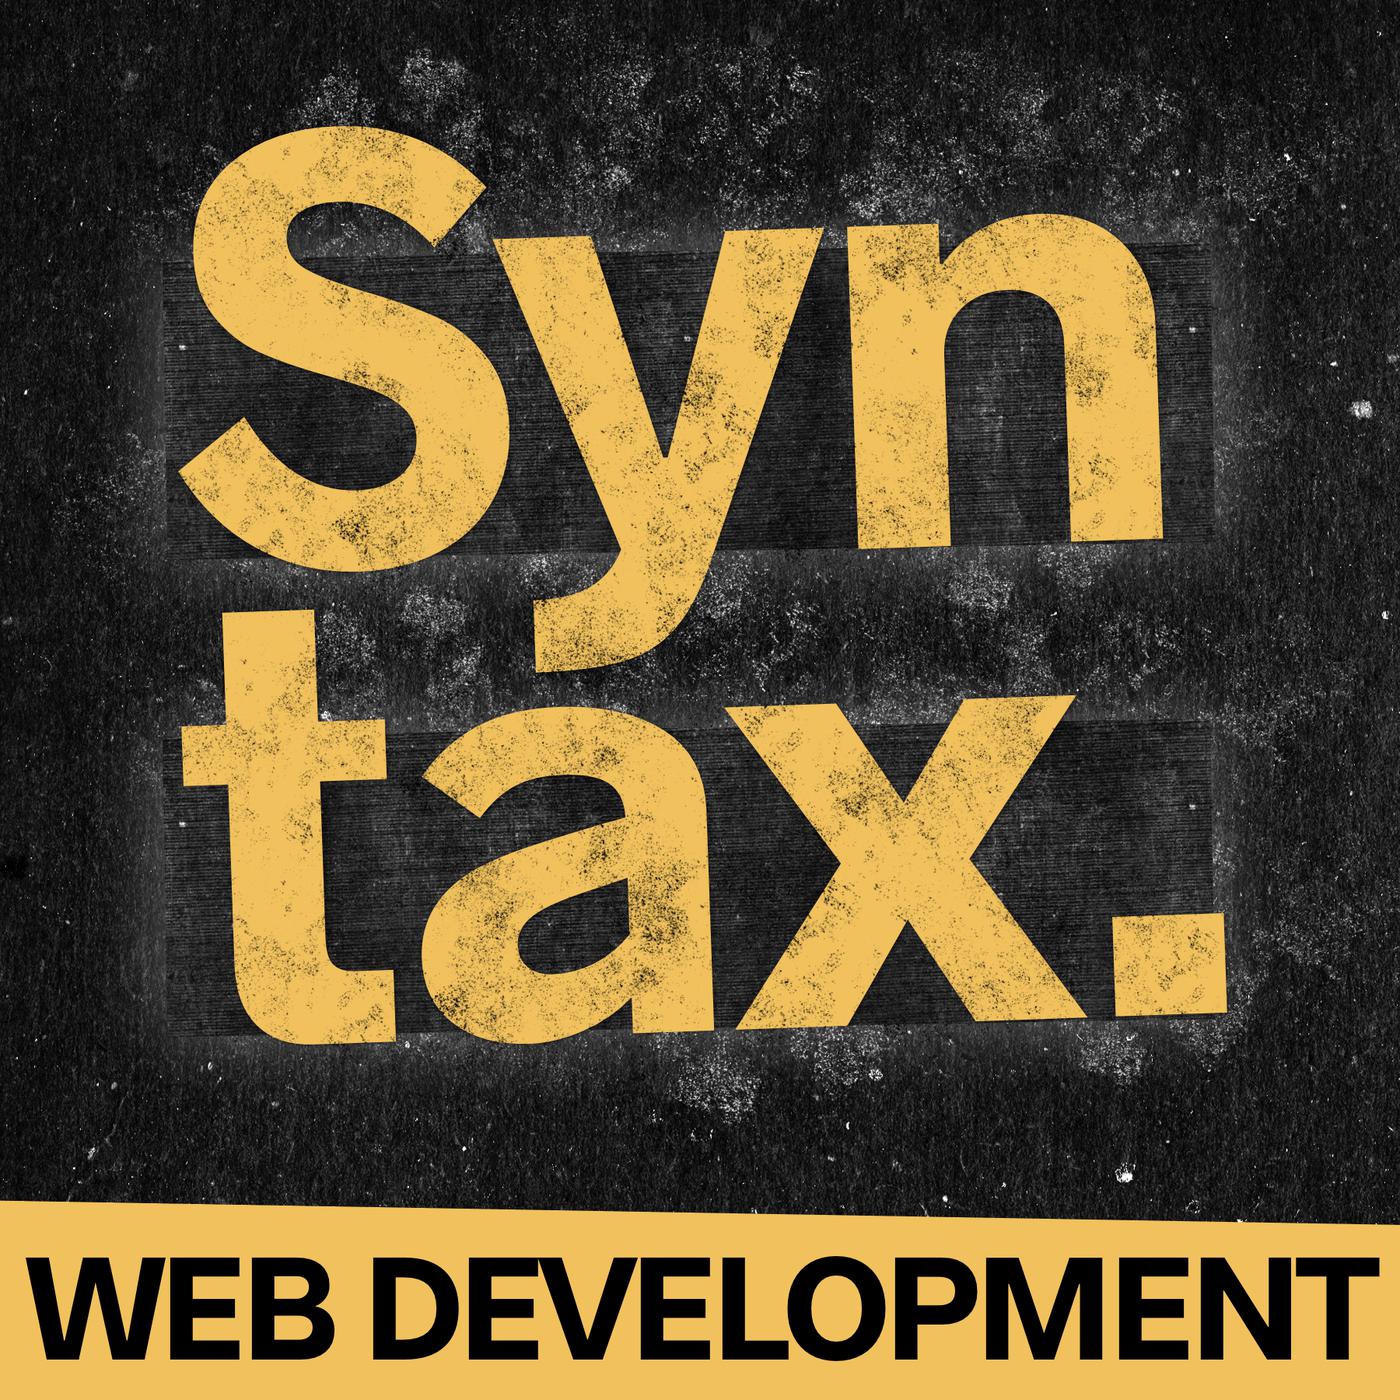 syntax-tasty-web-development-treats-wes-bos-HBLGrV82oAs.1400x1400